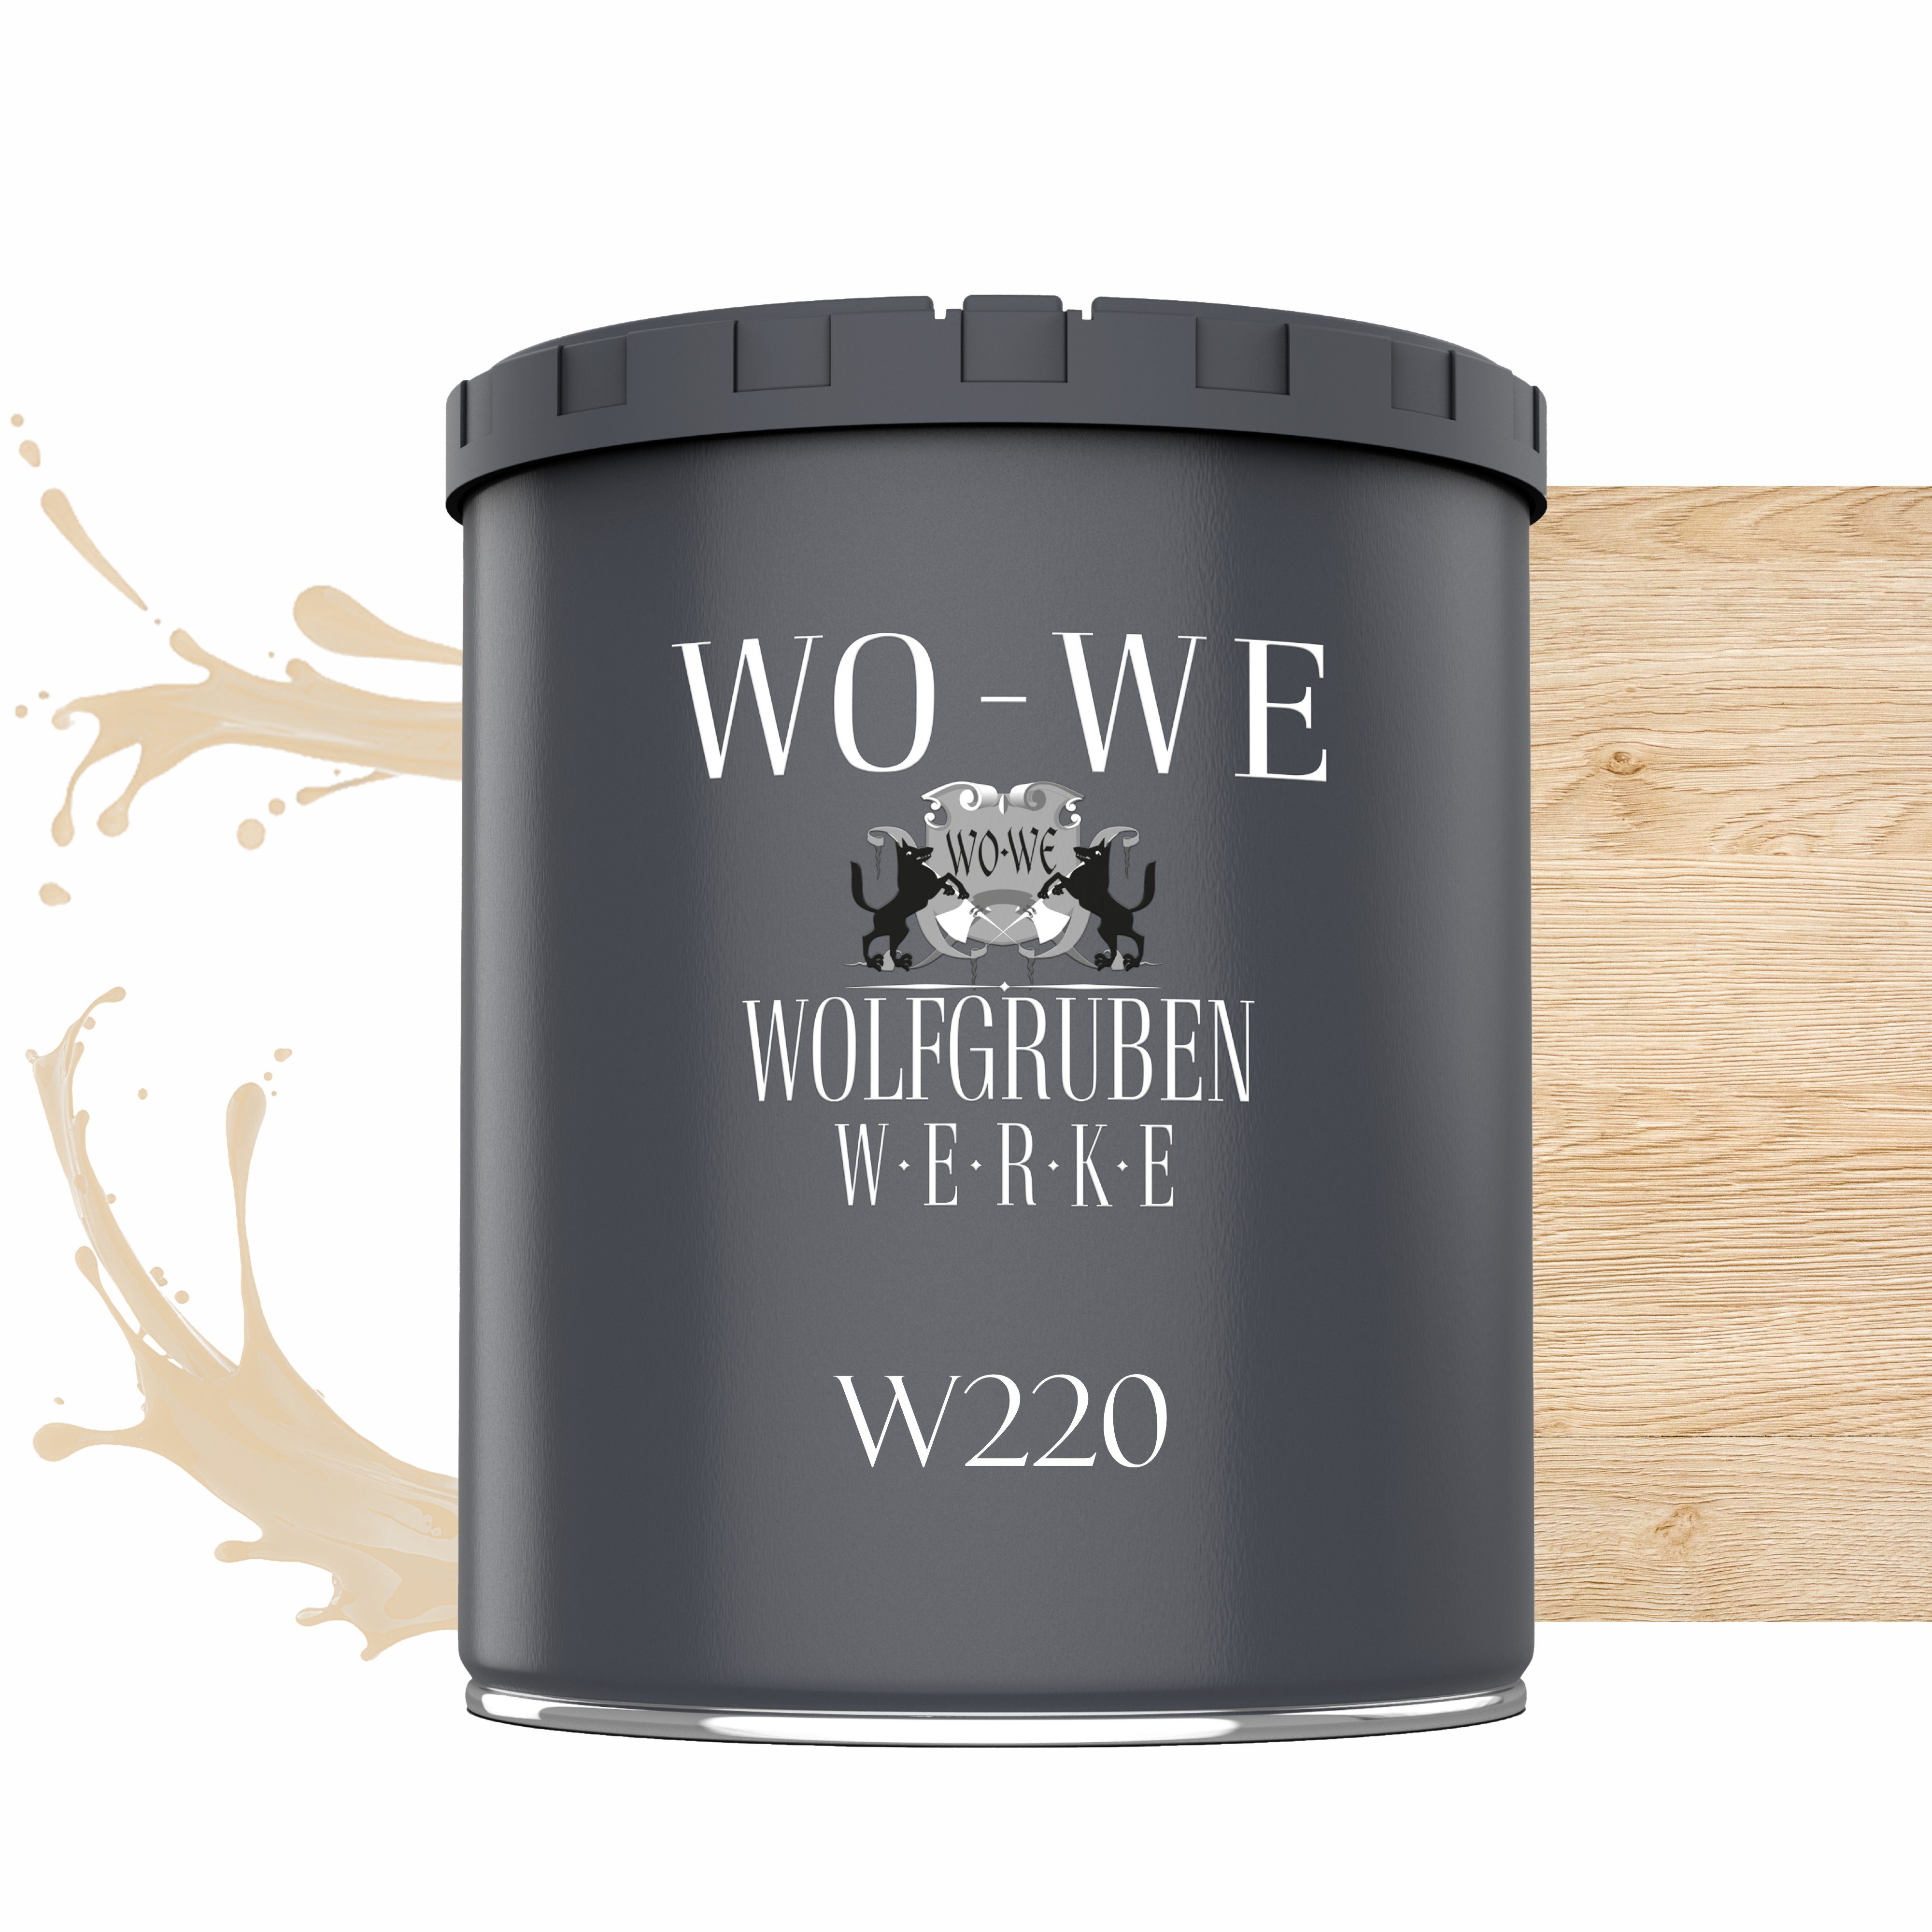 WO-WE Dickschichtlasur Holzschutzlasur 2in1 Holzlasur W220, 1-2,5L, Lösemittelfrei, UV-stabil Farblos